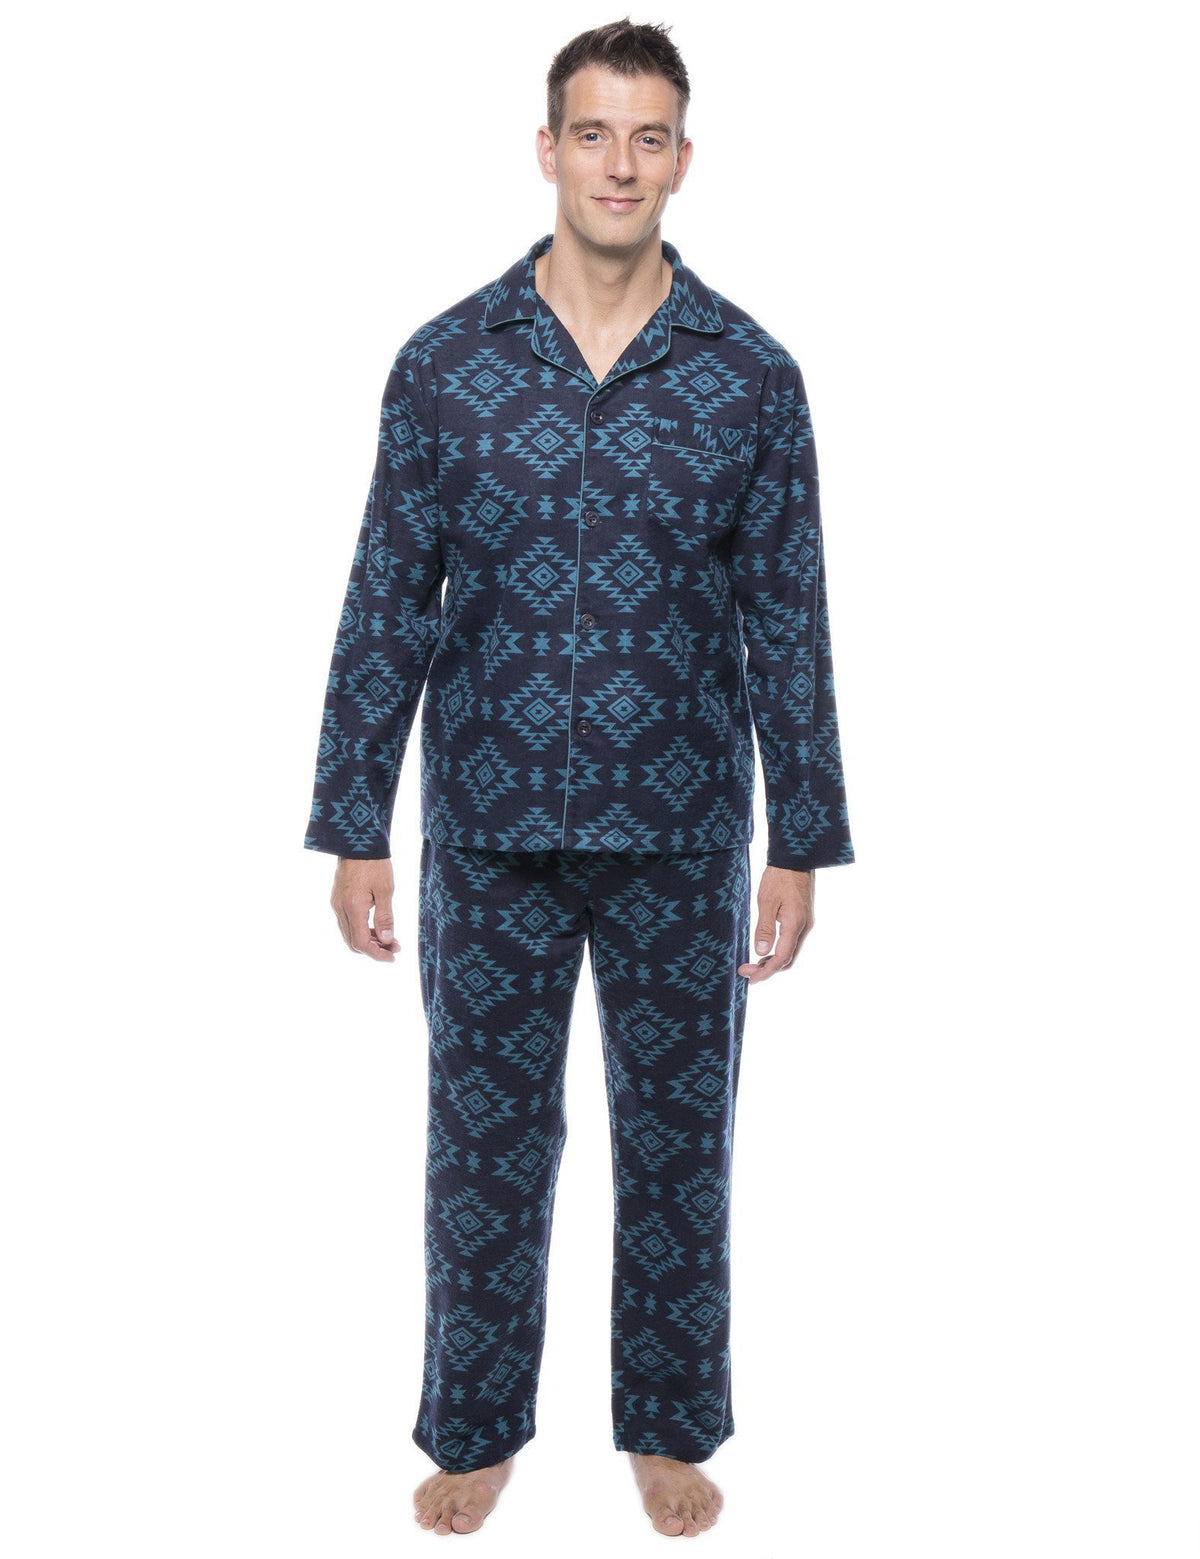 Men's 100% Cotton Flannel Pajama Set - Aztec Navy/Teal